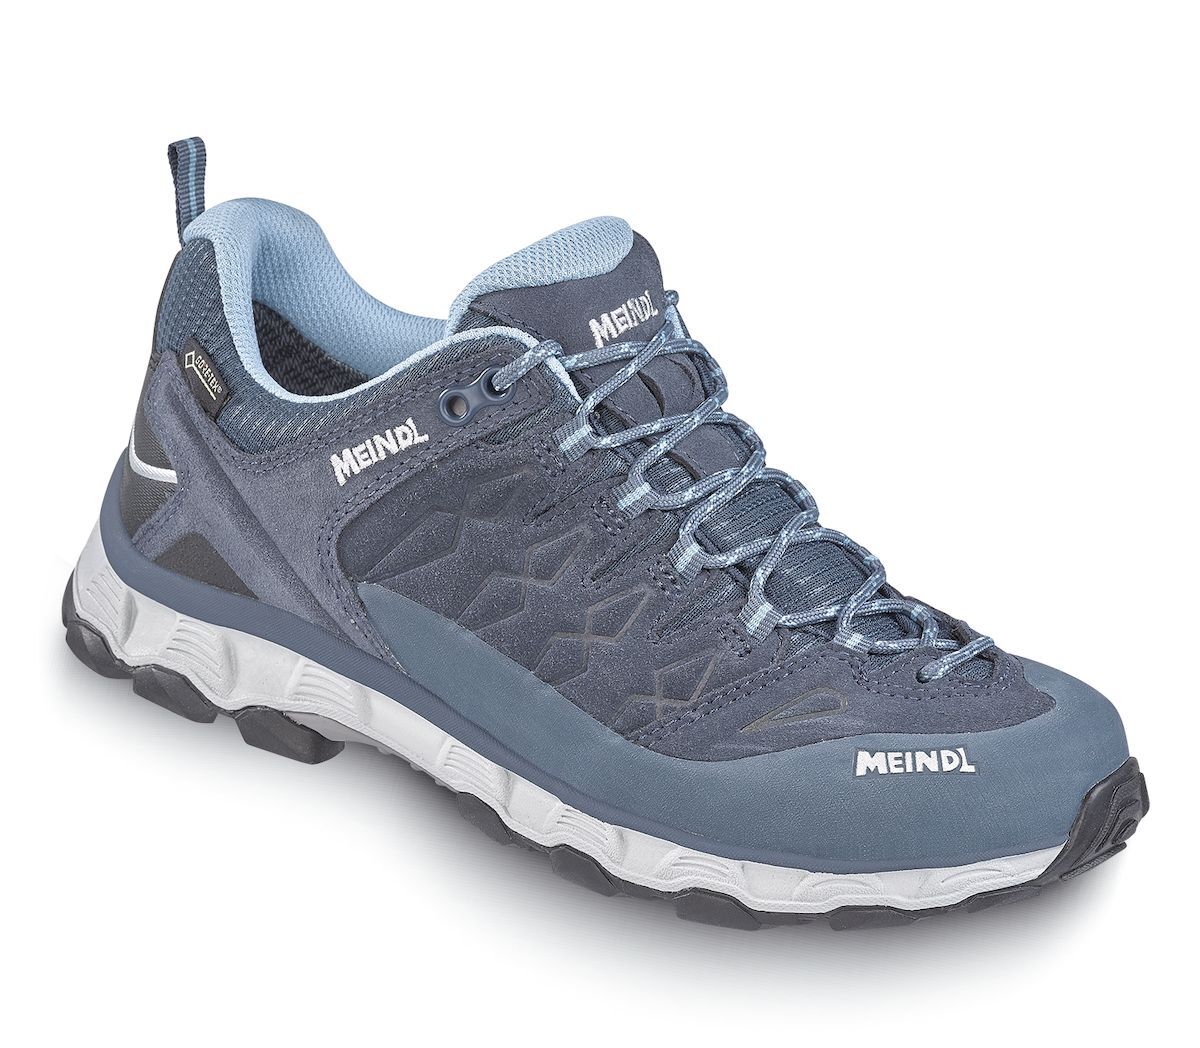 Meindl Lite Trail Lady GTX  - Walking shoes - Women's